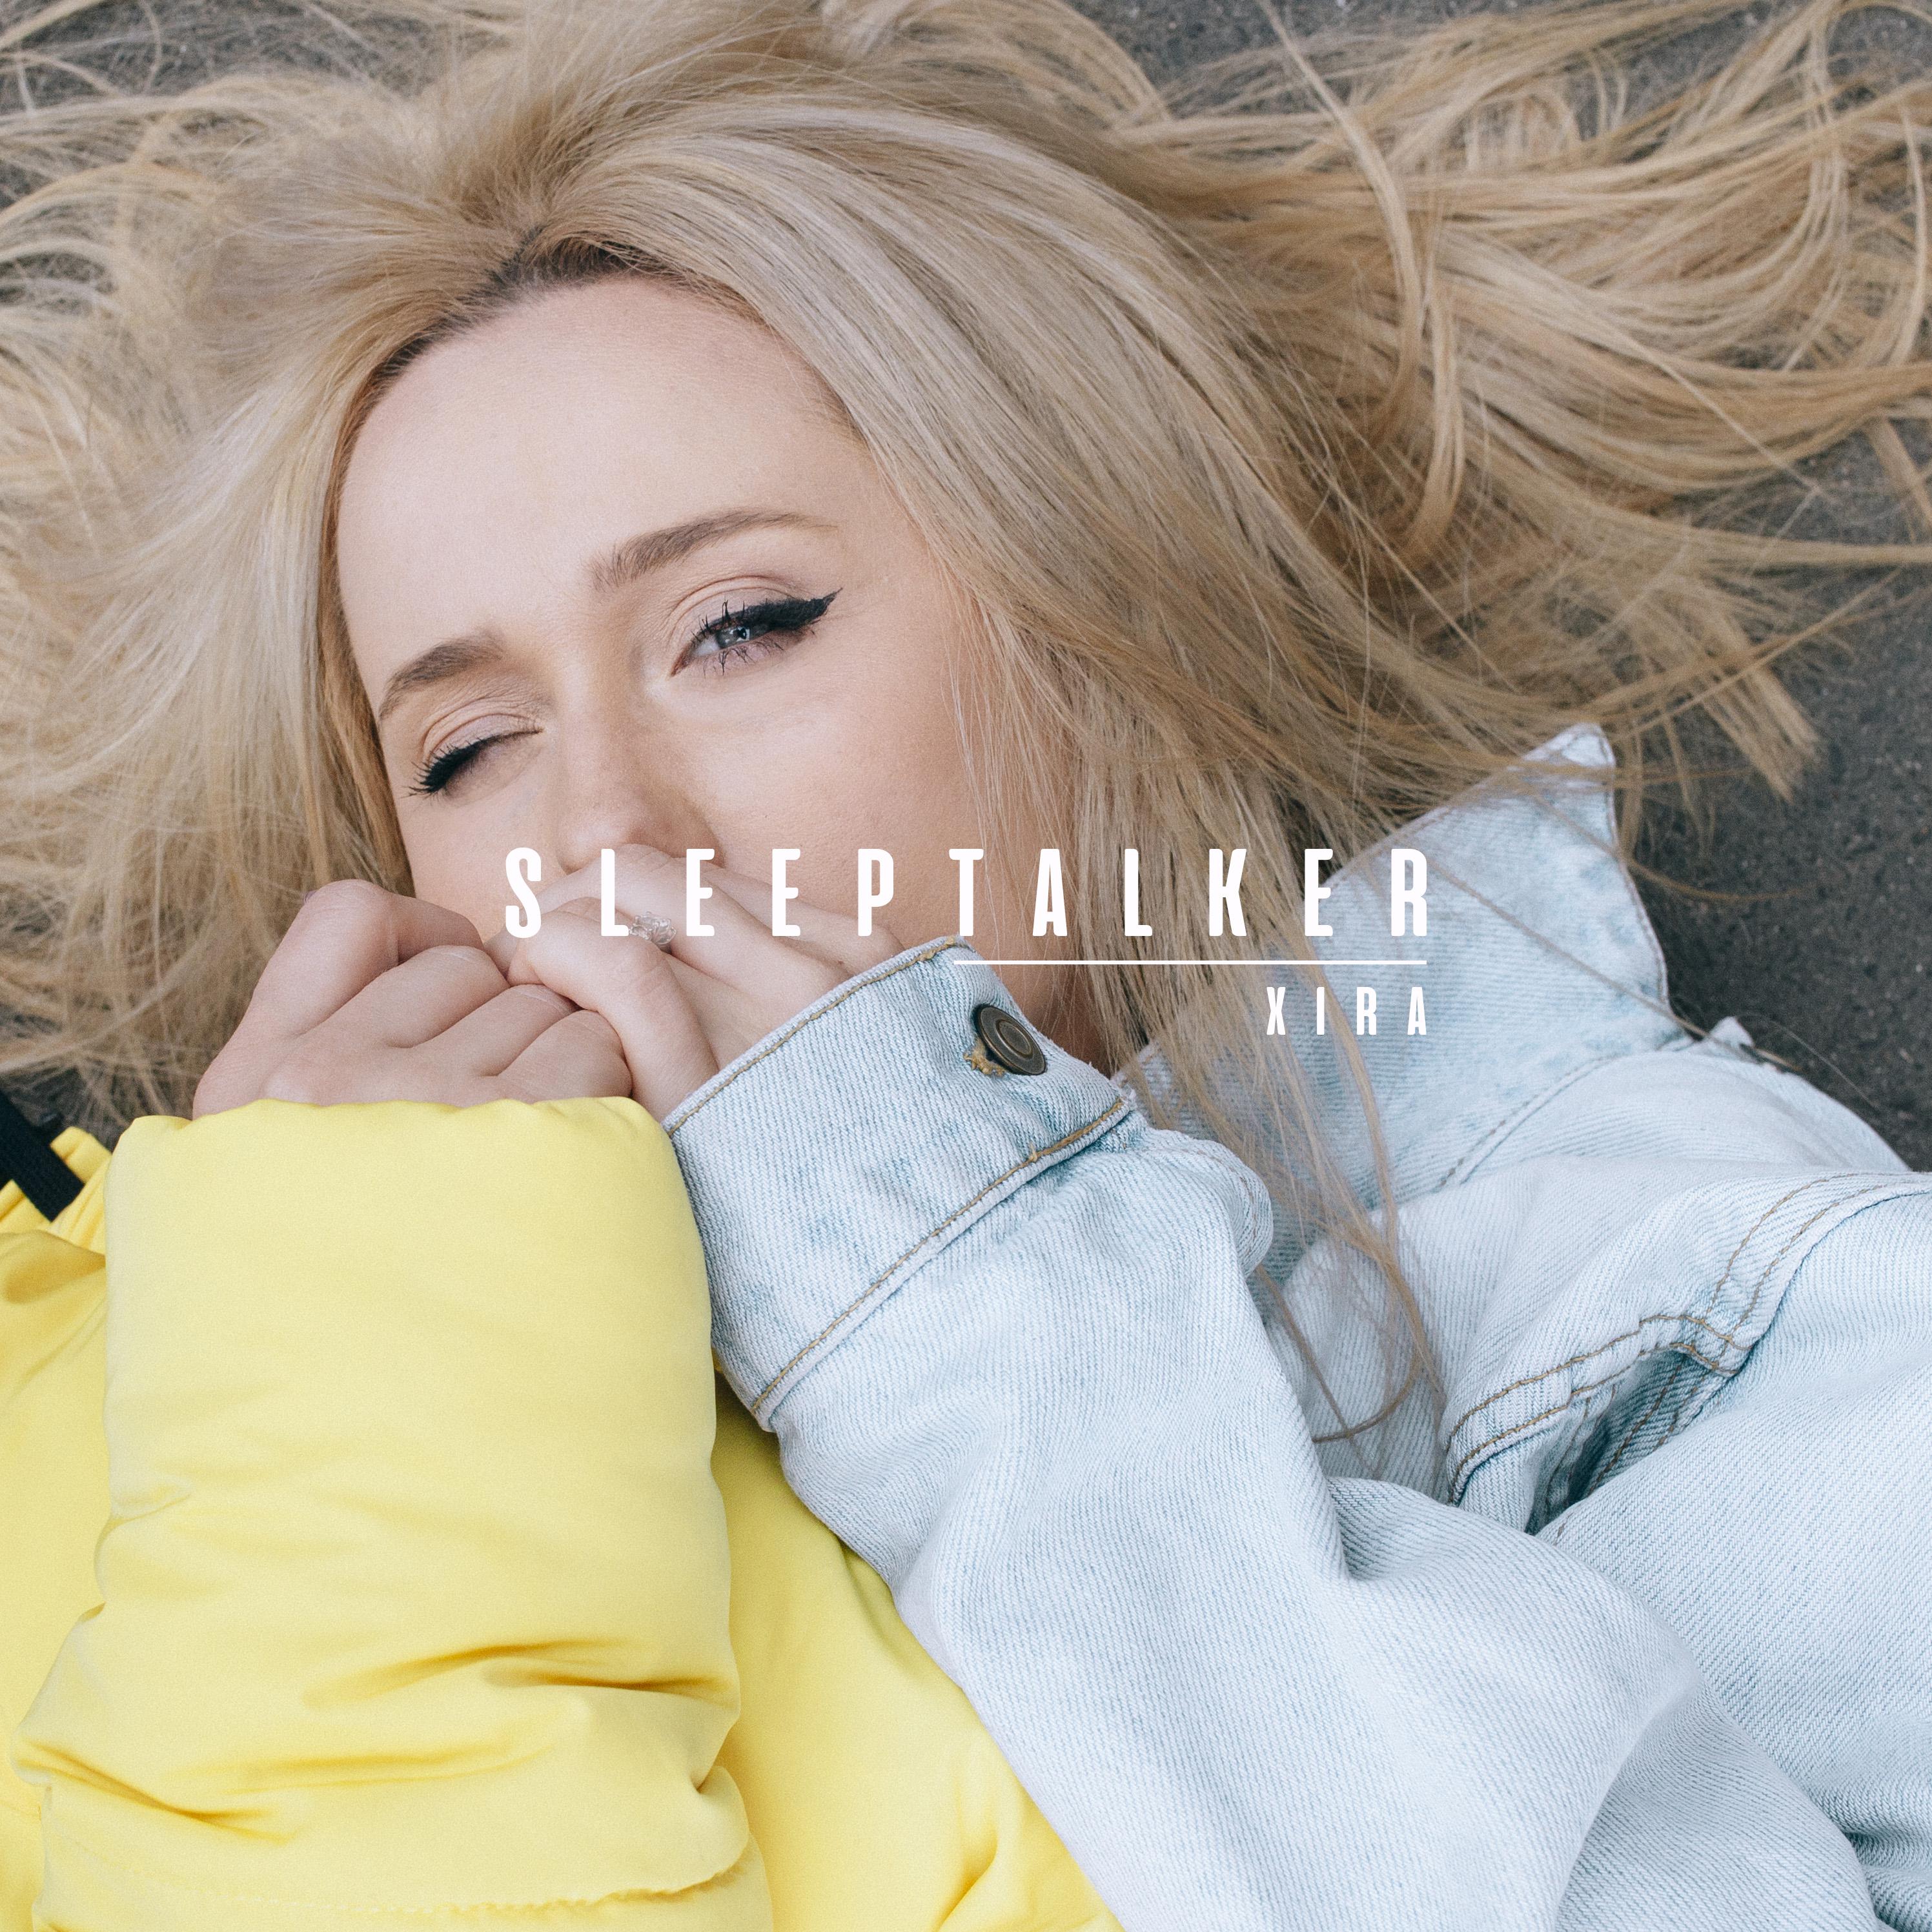 Sleep Talker歌词 歌手XIRA-专辑Sleep Talker-单曲《Sleep Talker》LRC歌词下载